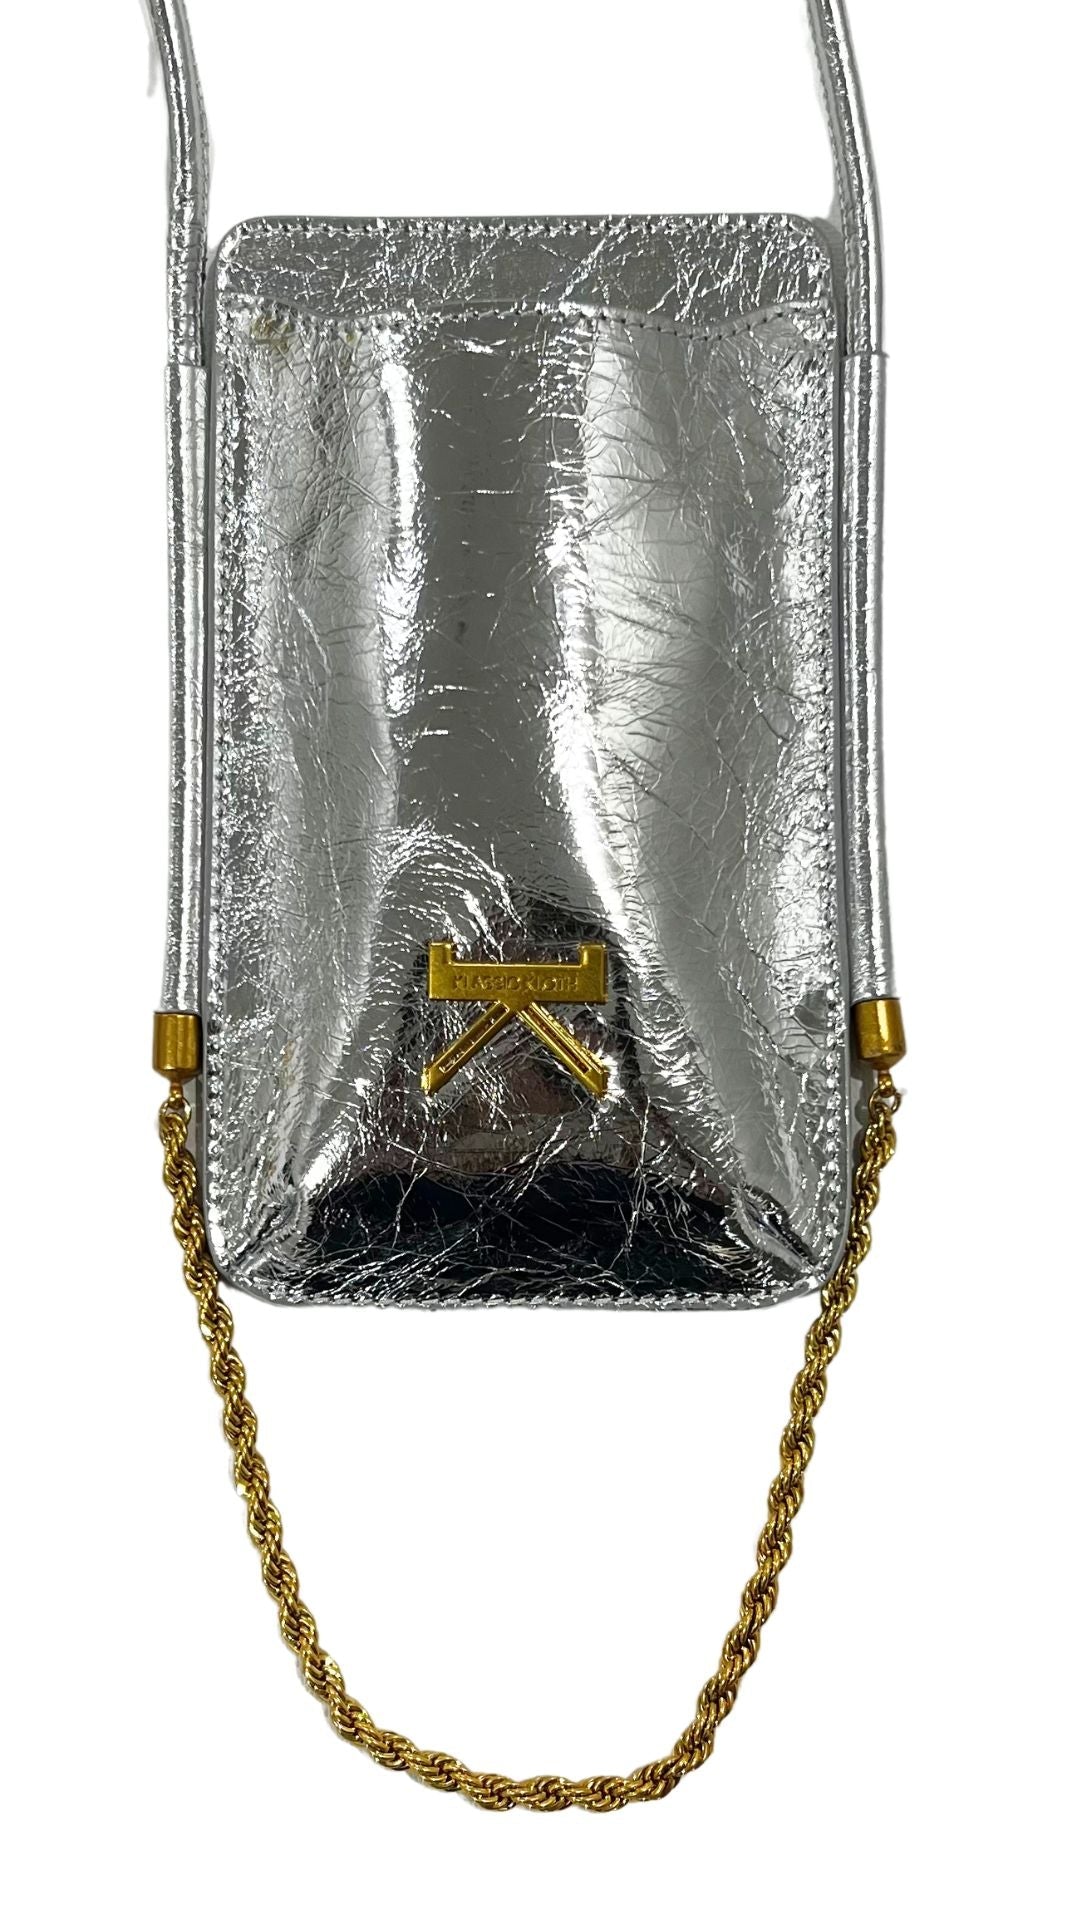 Silver Metallic Leather Clutch Bag | Callie | Pre Fall 18 | JIMMY CHOO